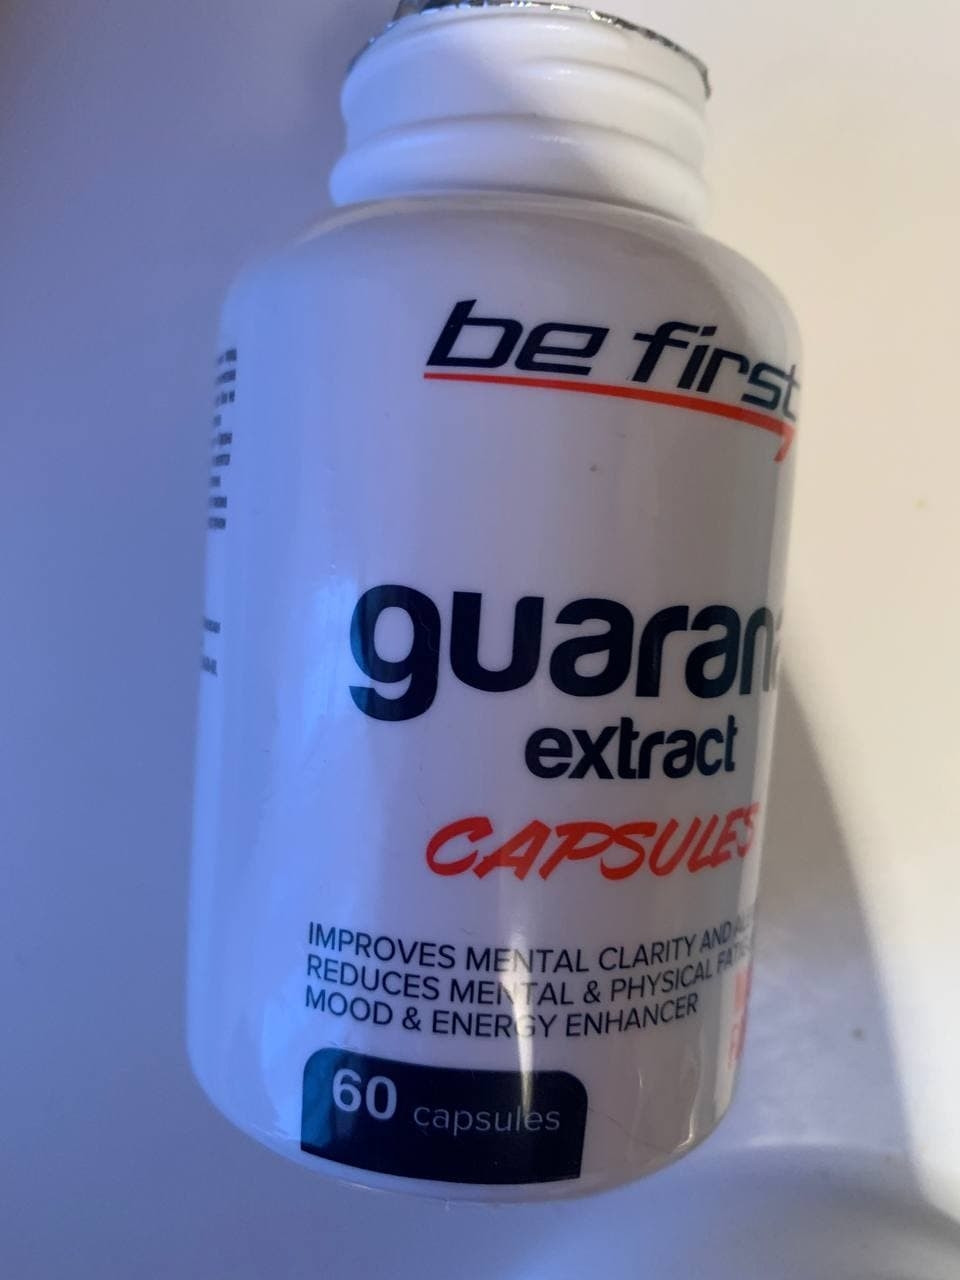 Be First Guarana Extract Capsules - Хорошо работает